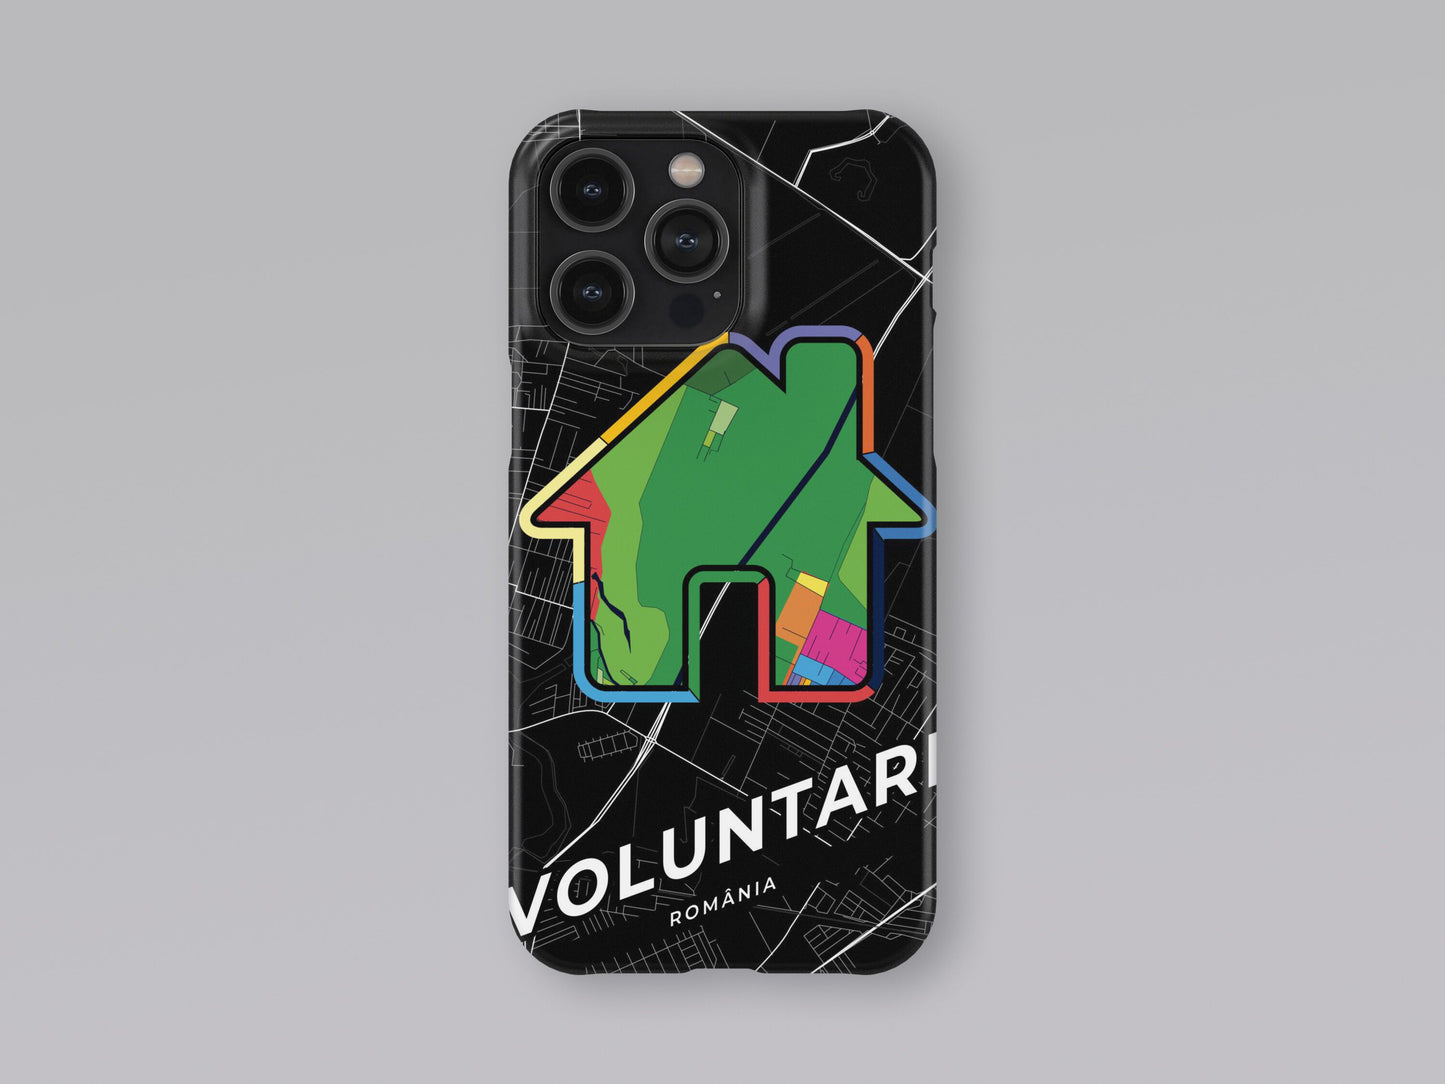 Voluntari Romania slim phone case with colorful icon 3